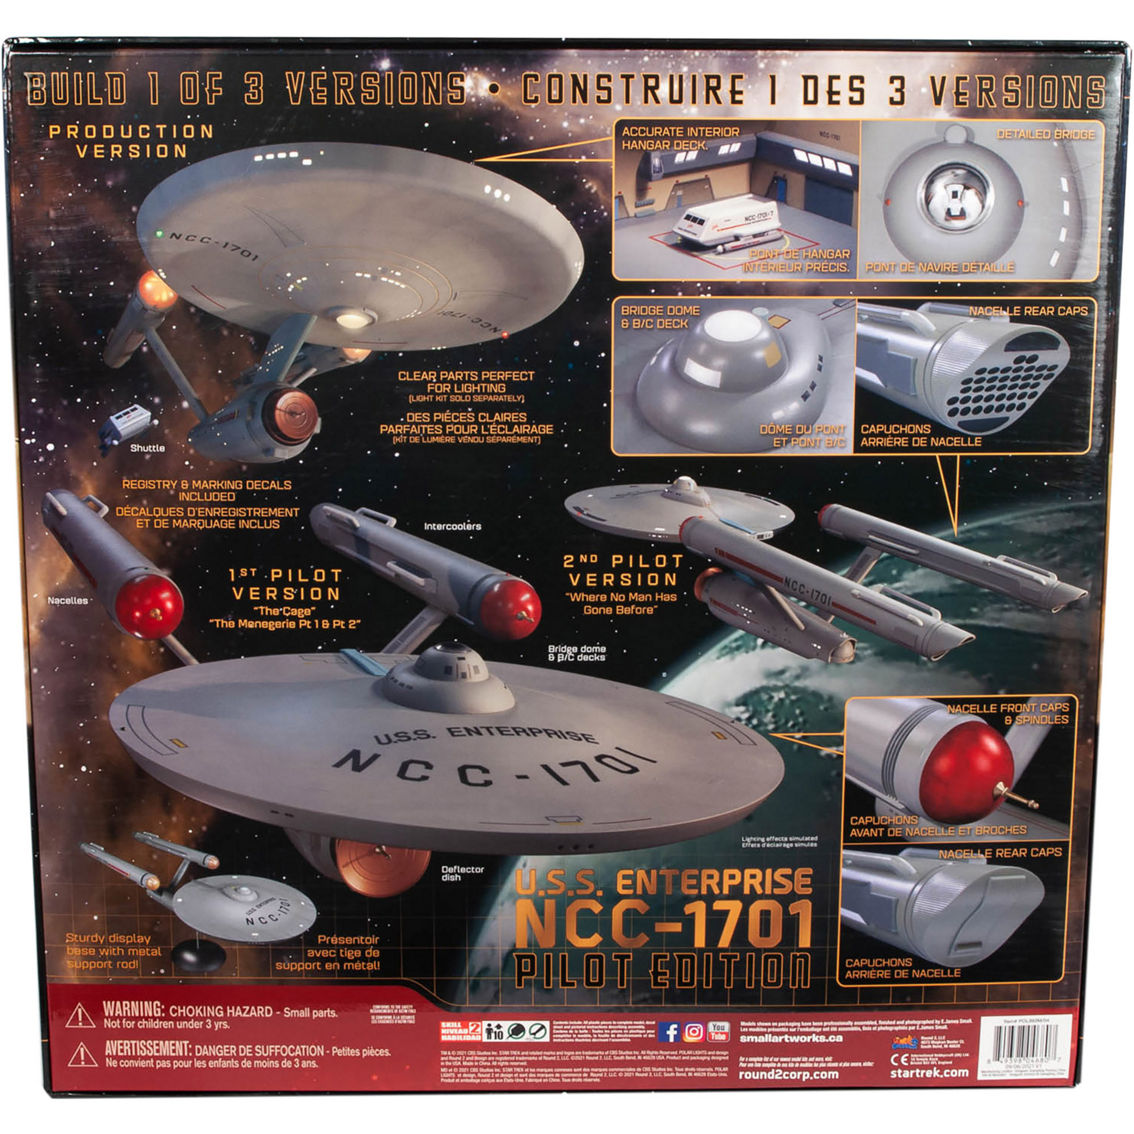 Round 2 Polar Lights: Scale Model Kit Star Trek TOS U.S.S. Enterprise Pilot Edition - Image 2 of 5